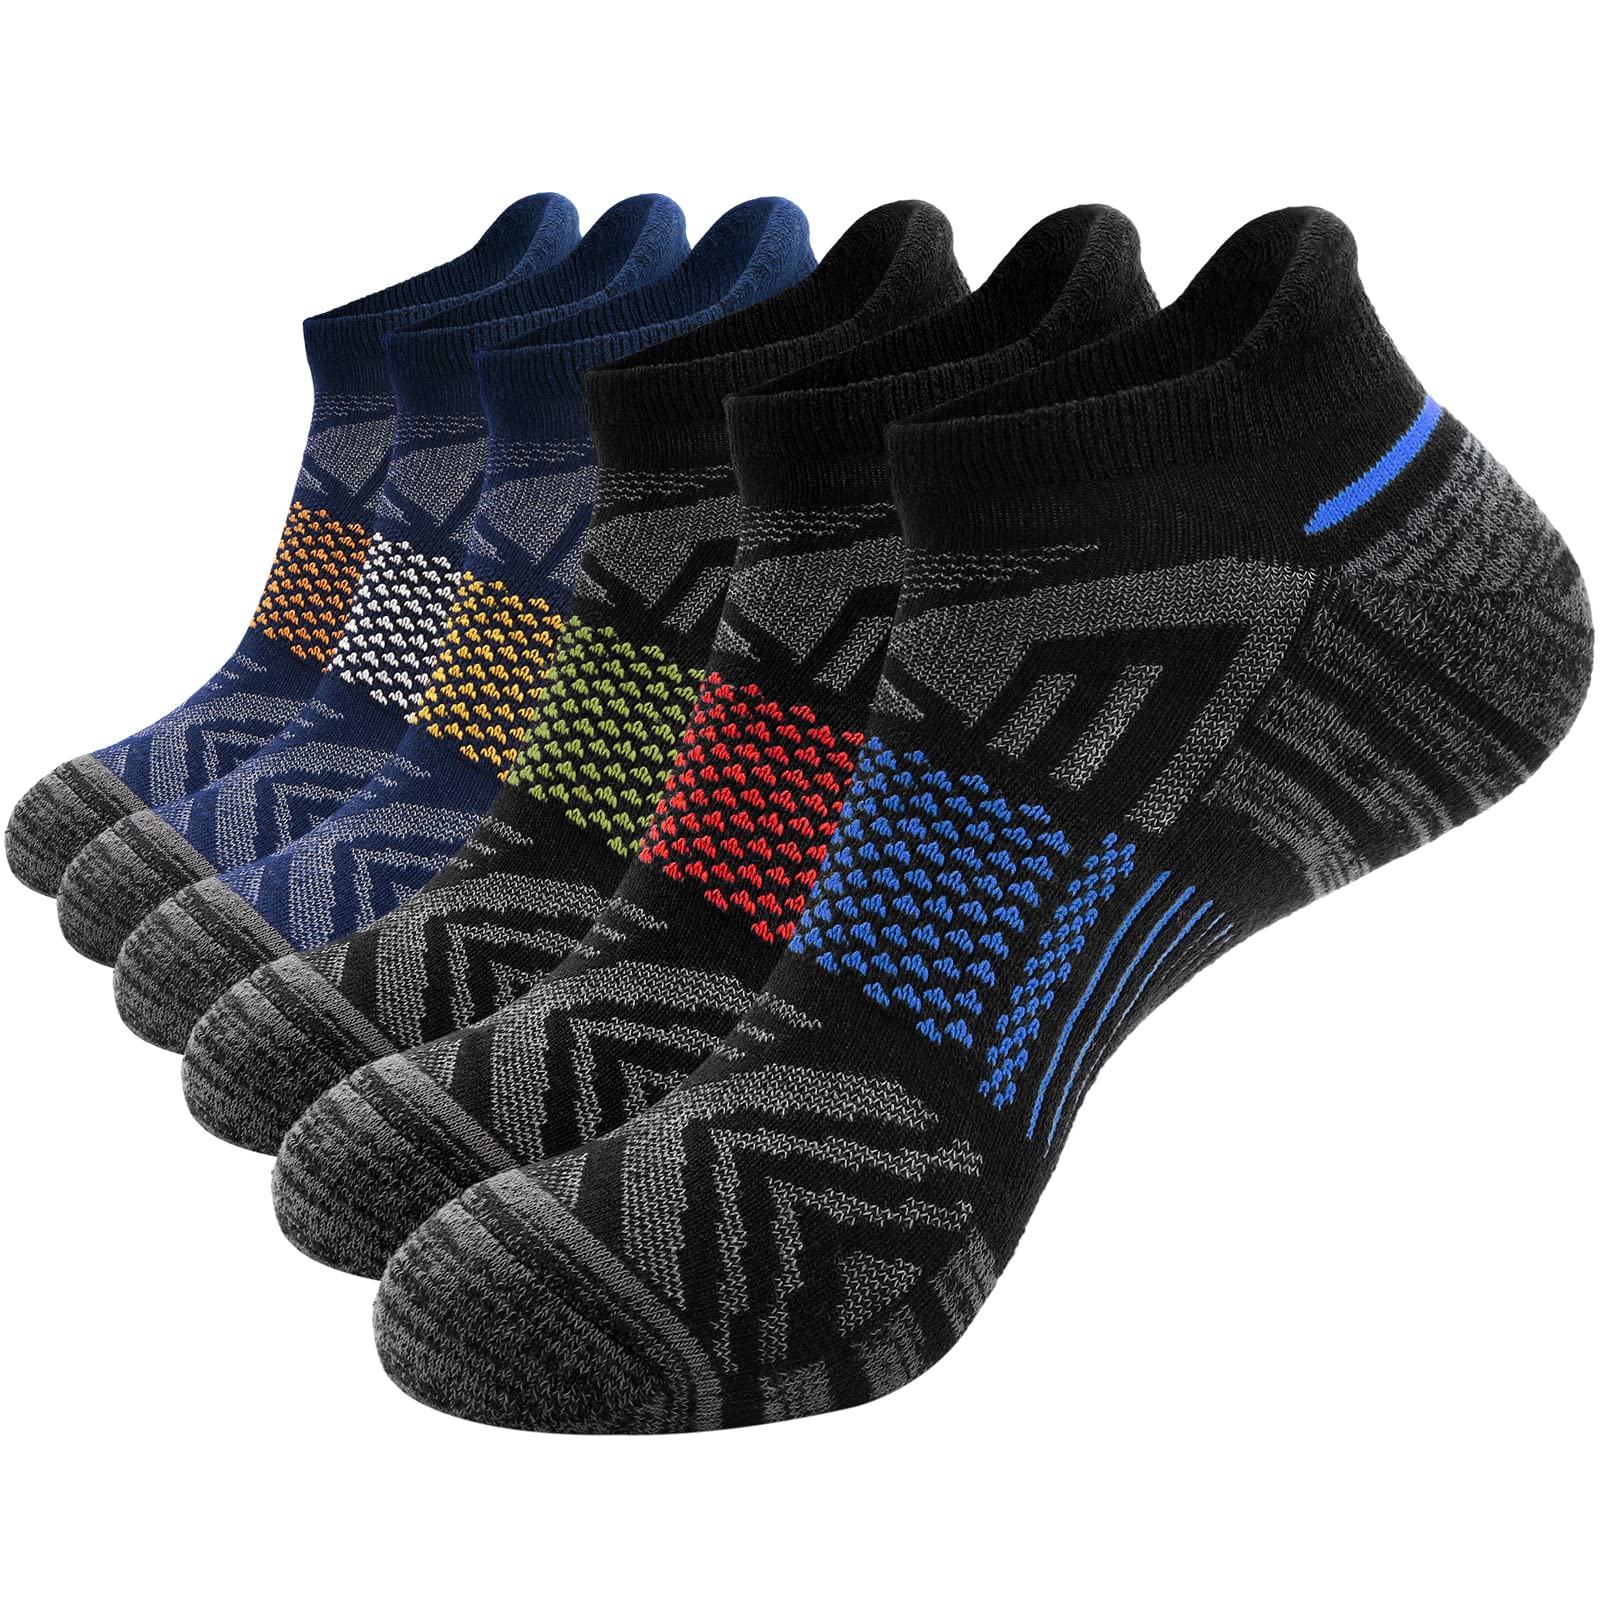 Niofind Mens Socks, 6 Pairs Ankle Socks for Men Women, Cushioned Cotton Trainer Socks Low Cut Breathable Running Socks, Anti Blister Athletic Sports Socks Unisex